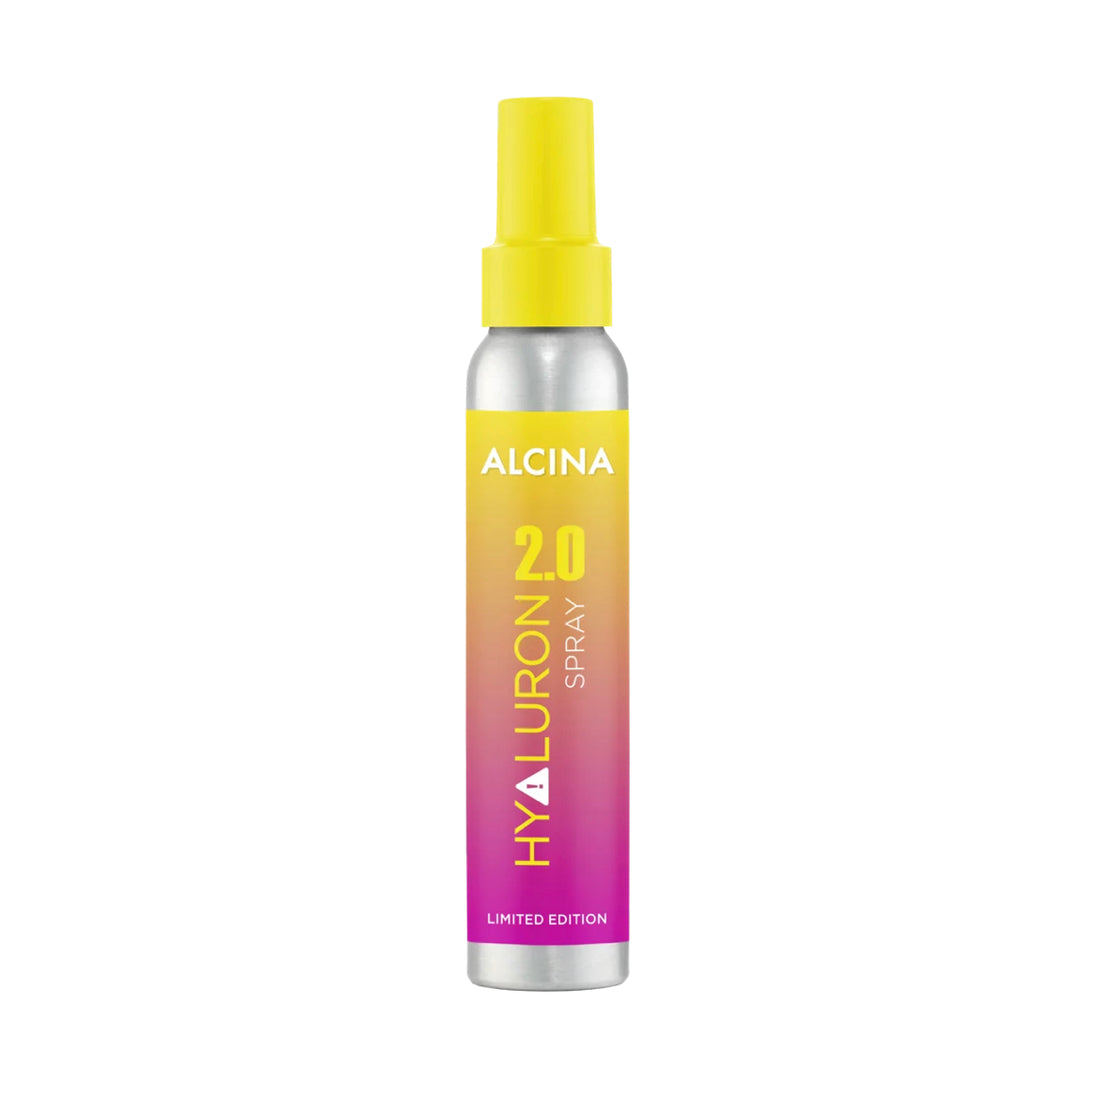 Alcina Hair - Hyaluron 2.0 spray